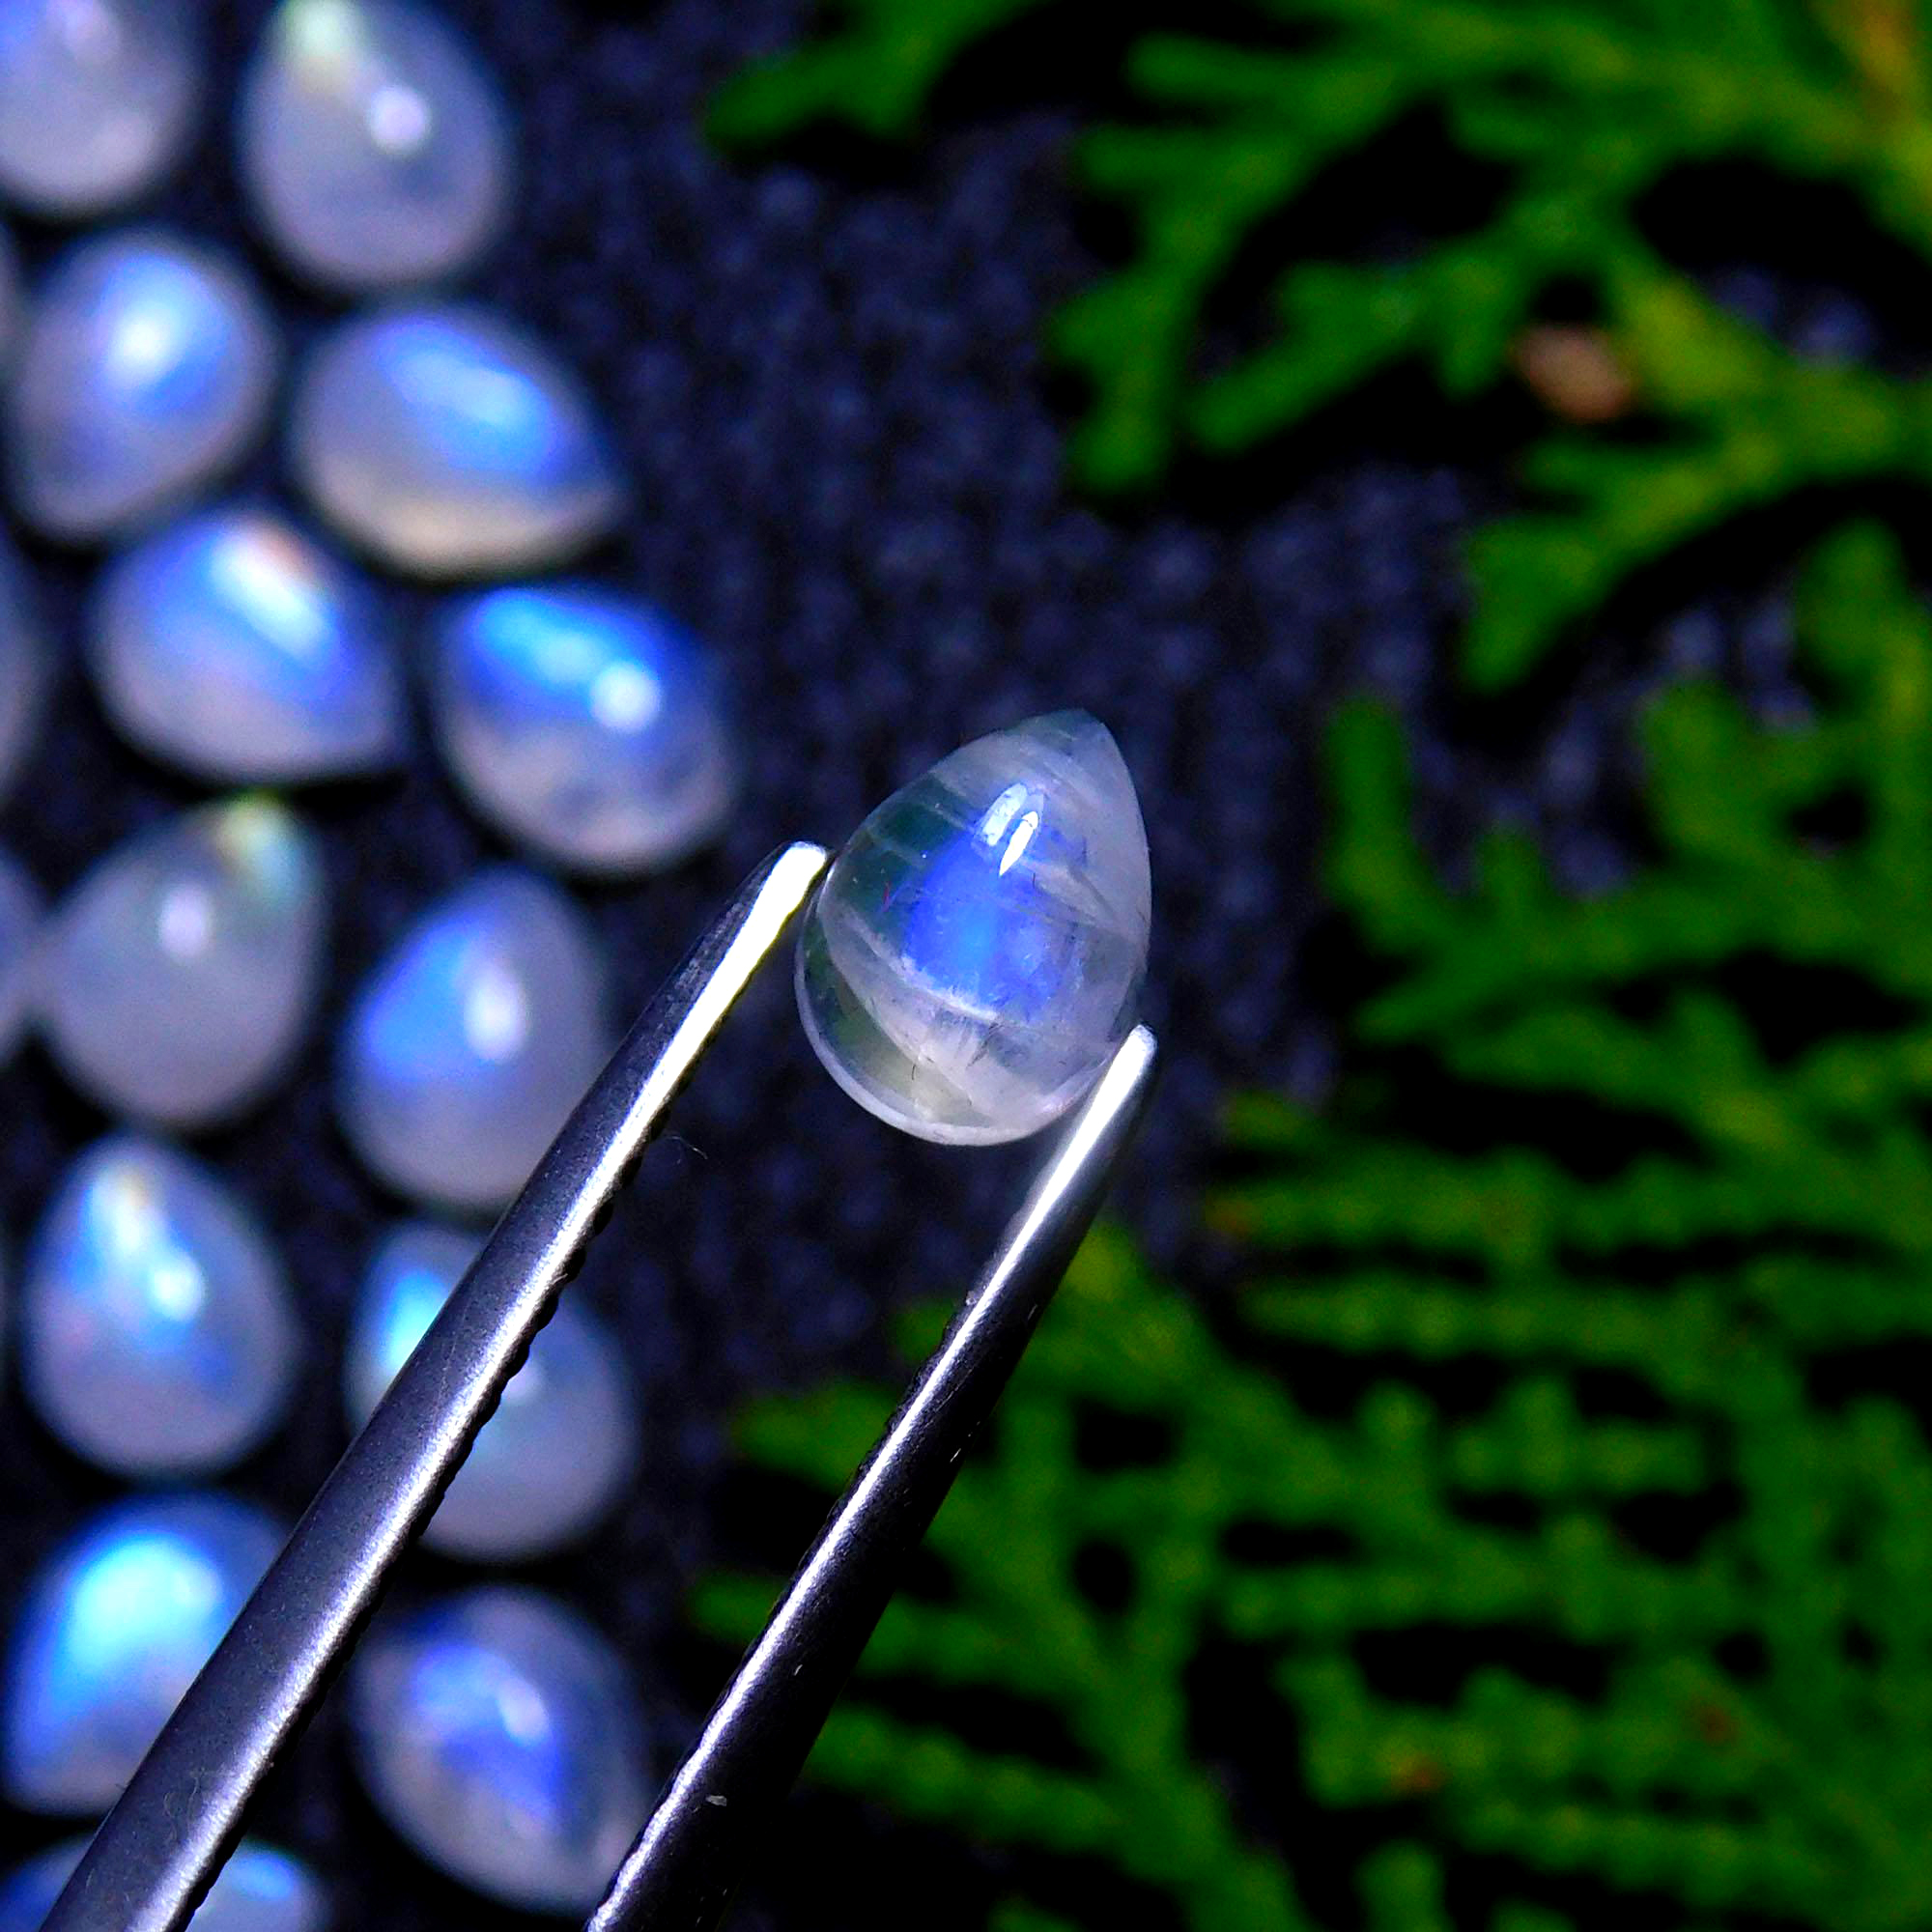 100Pcs 95Cts Natural Rainbow Moonstone Pear Shape Blue Fire Cabochon Lot Semi Precious Loose Gemstone Jewelry Supplies Crystal 7X5mm #9905